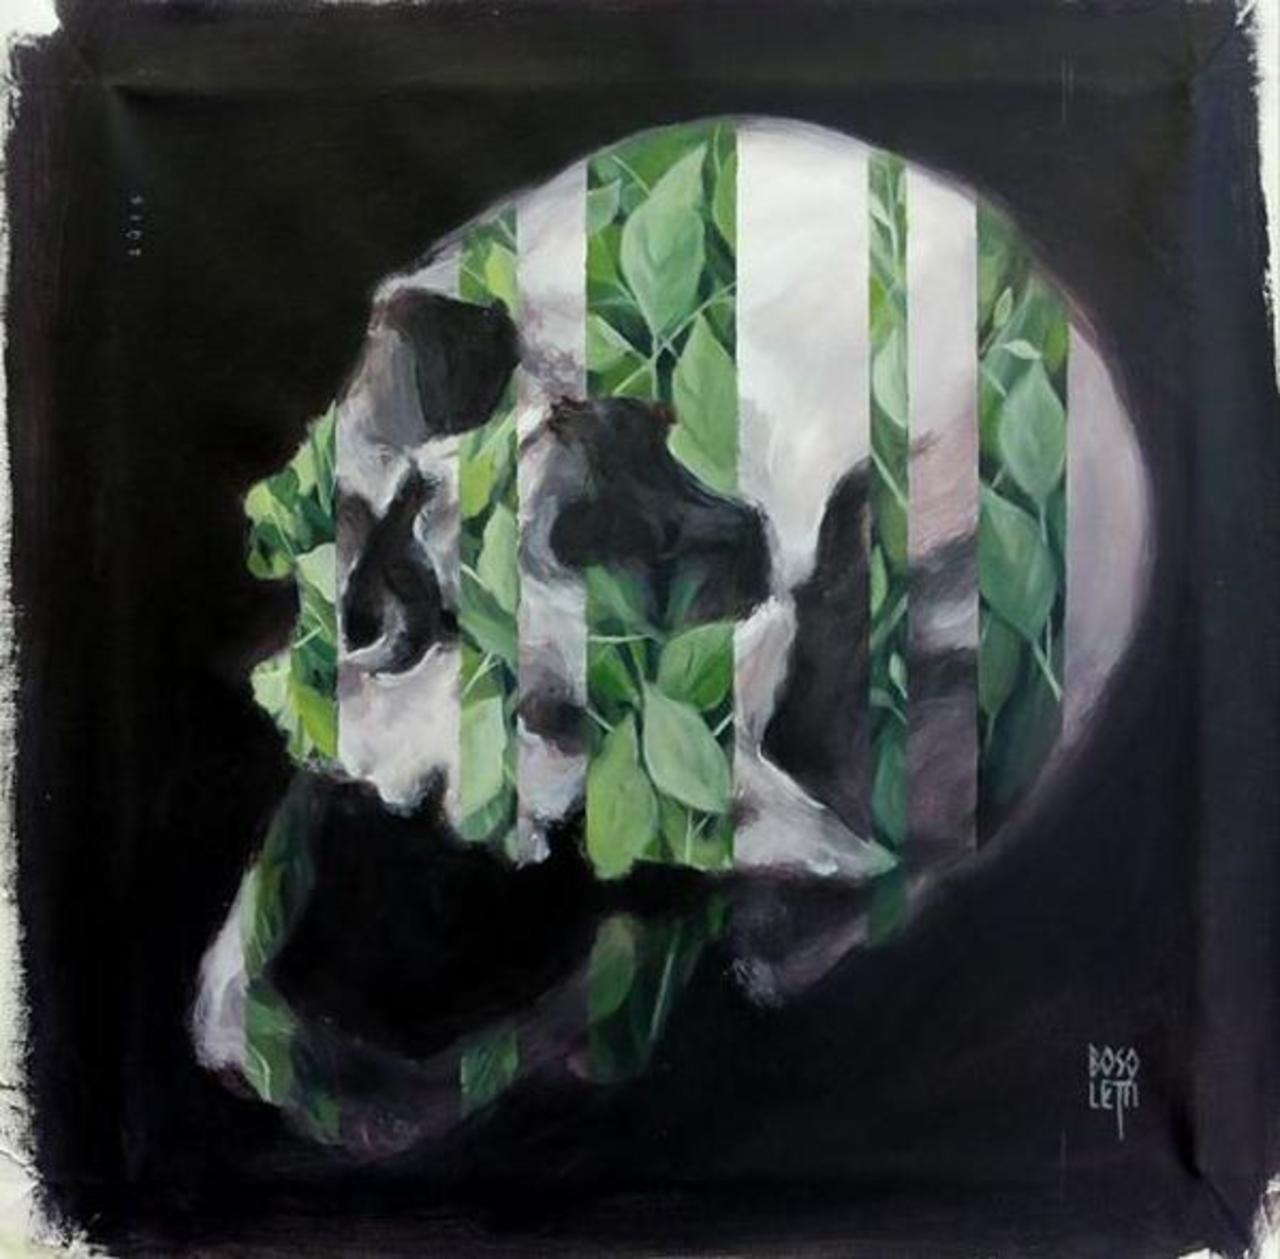 RT @DavidBonnand "Skull study, 2015 by #Bosoletti (1988–)" #streetart #graffiti #art #urbanart https://t.co/BLOI222z2I